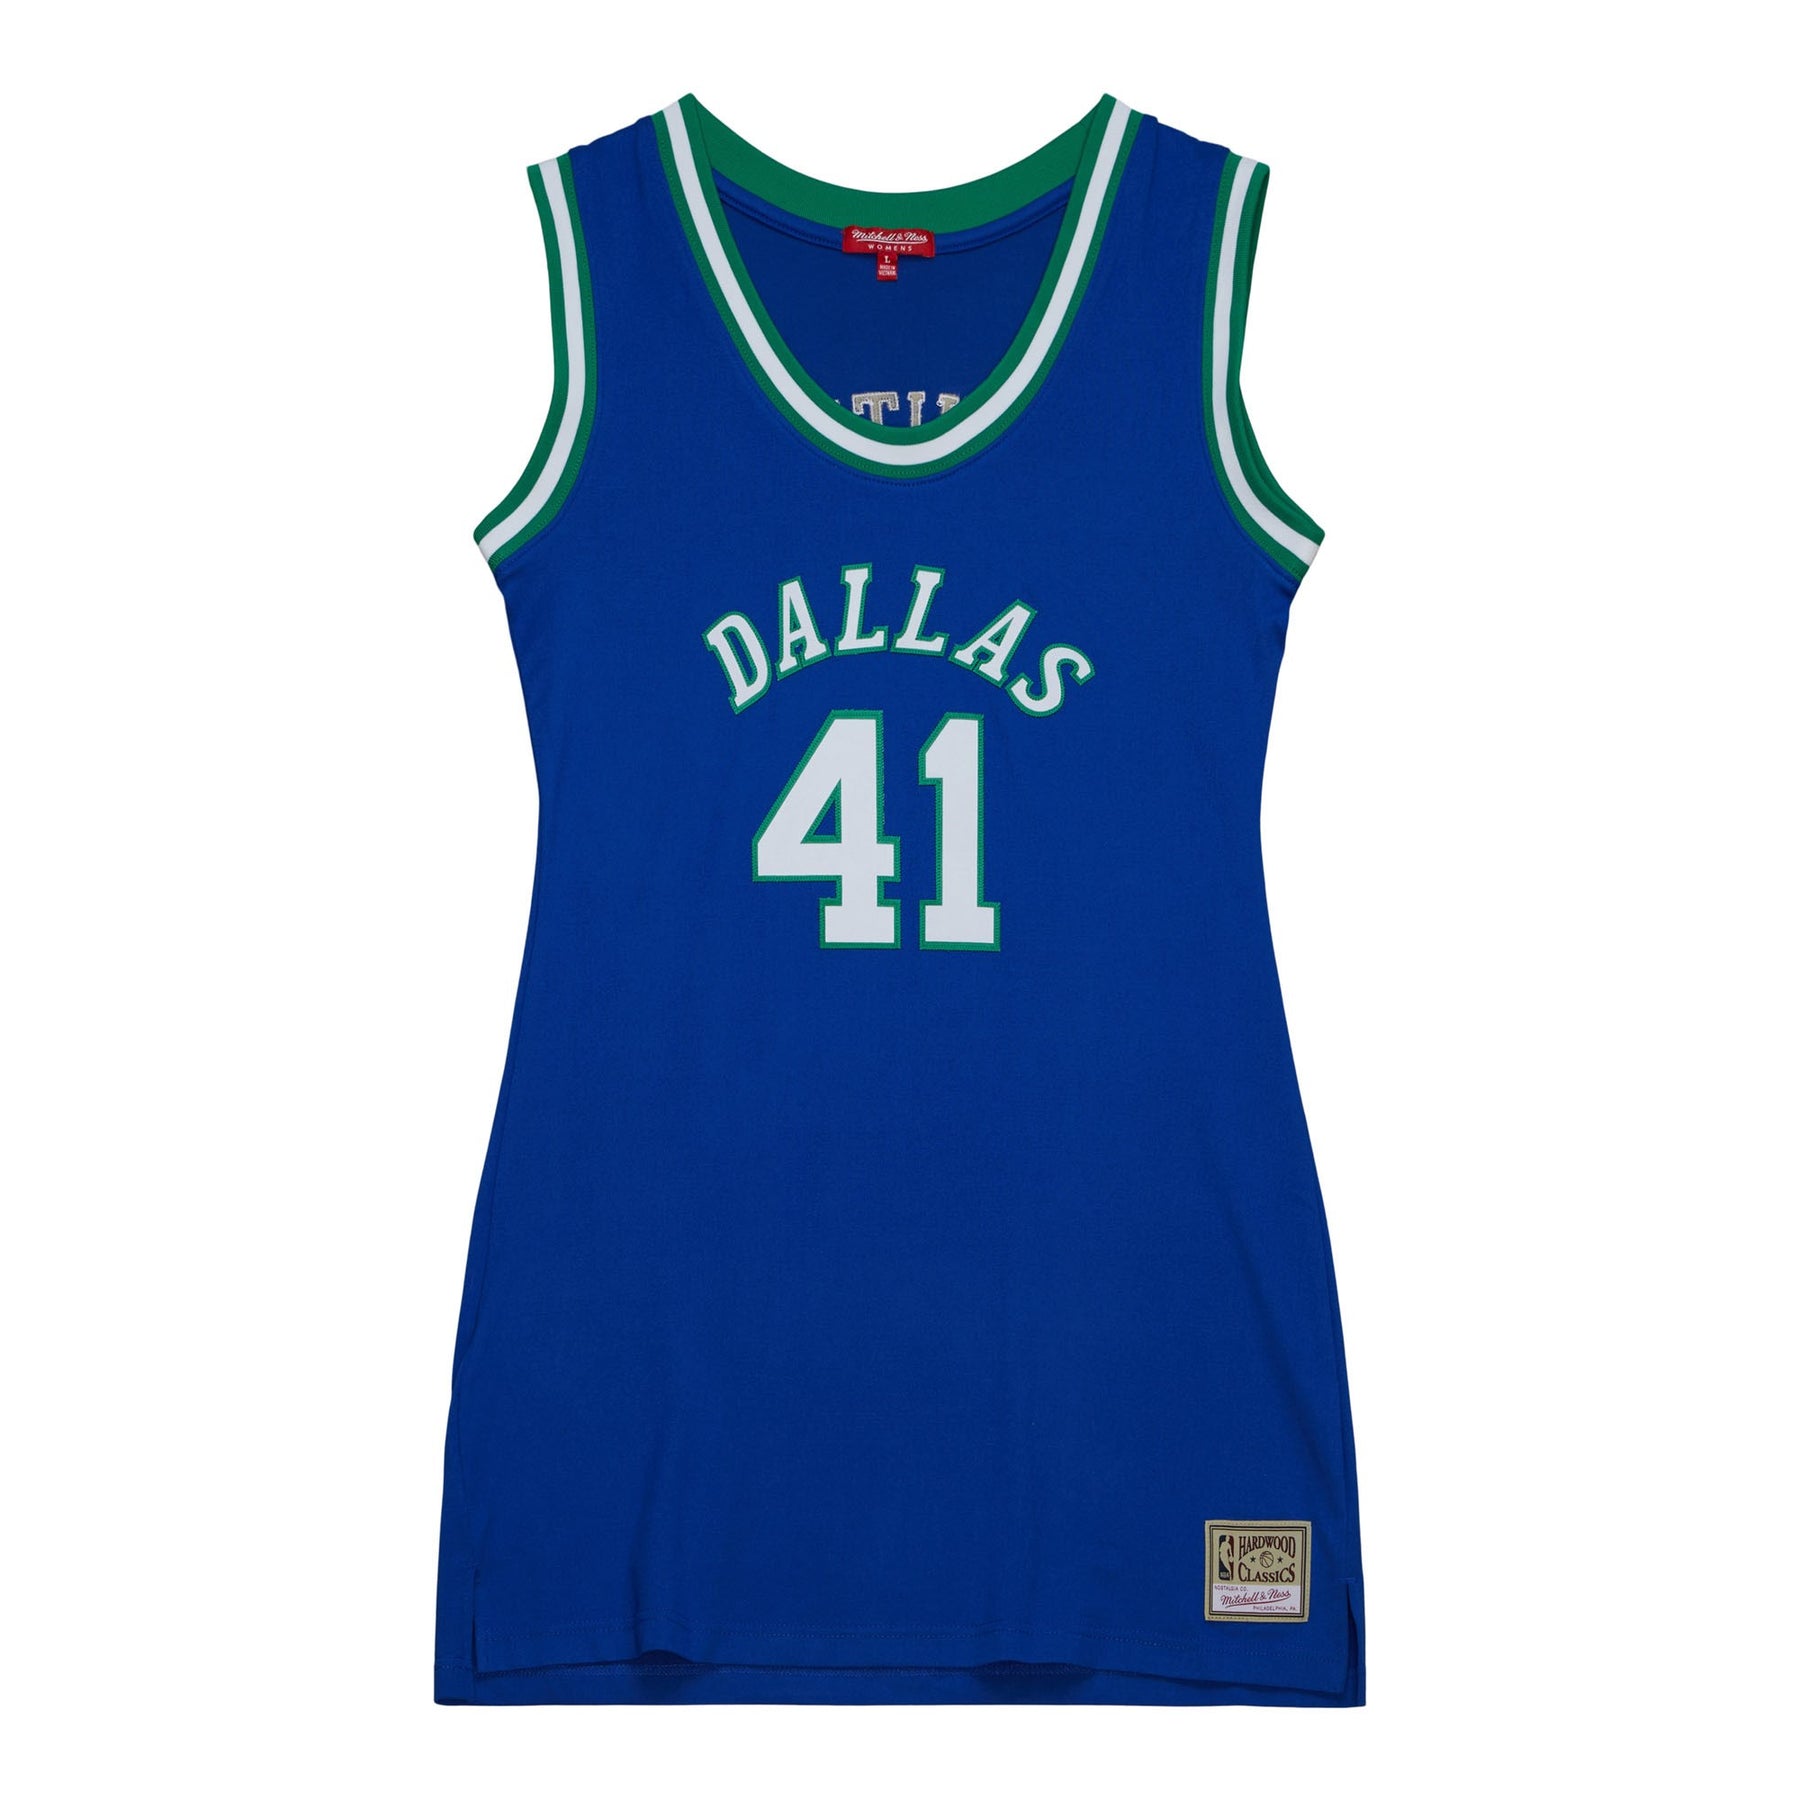 Dallas Mavericks green Hardwood Classics t-shirt jerseys are now